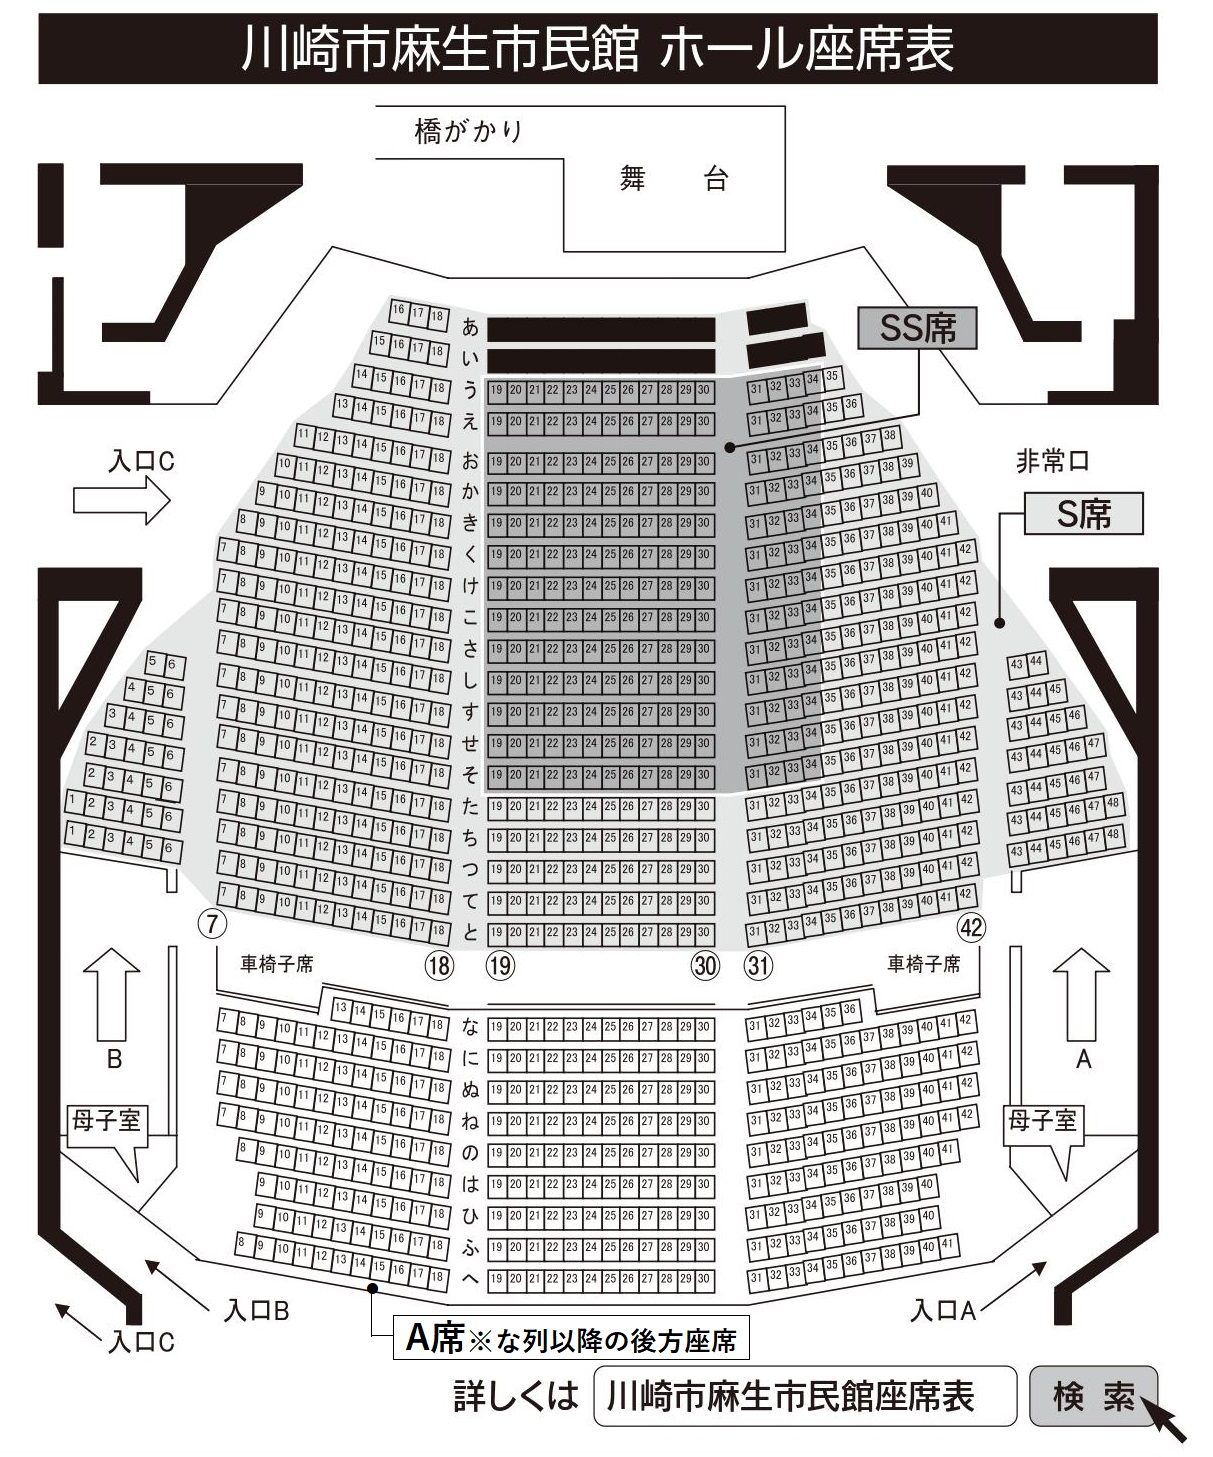 川崎麻生市民館のホール座席表